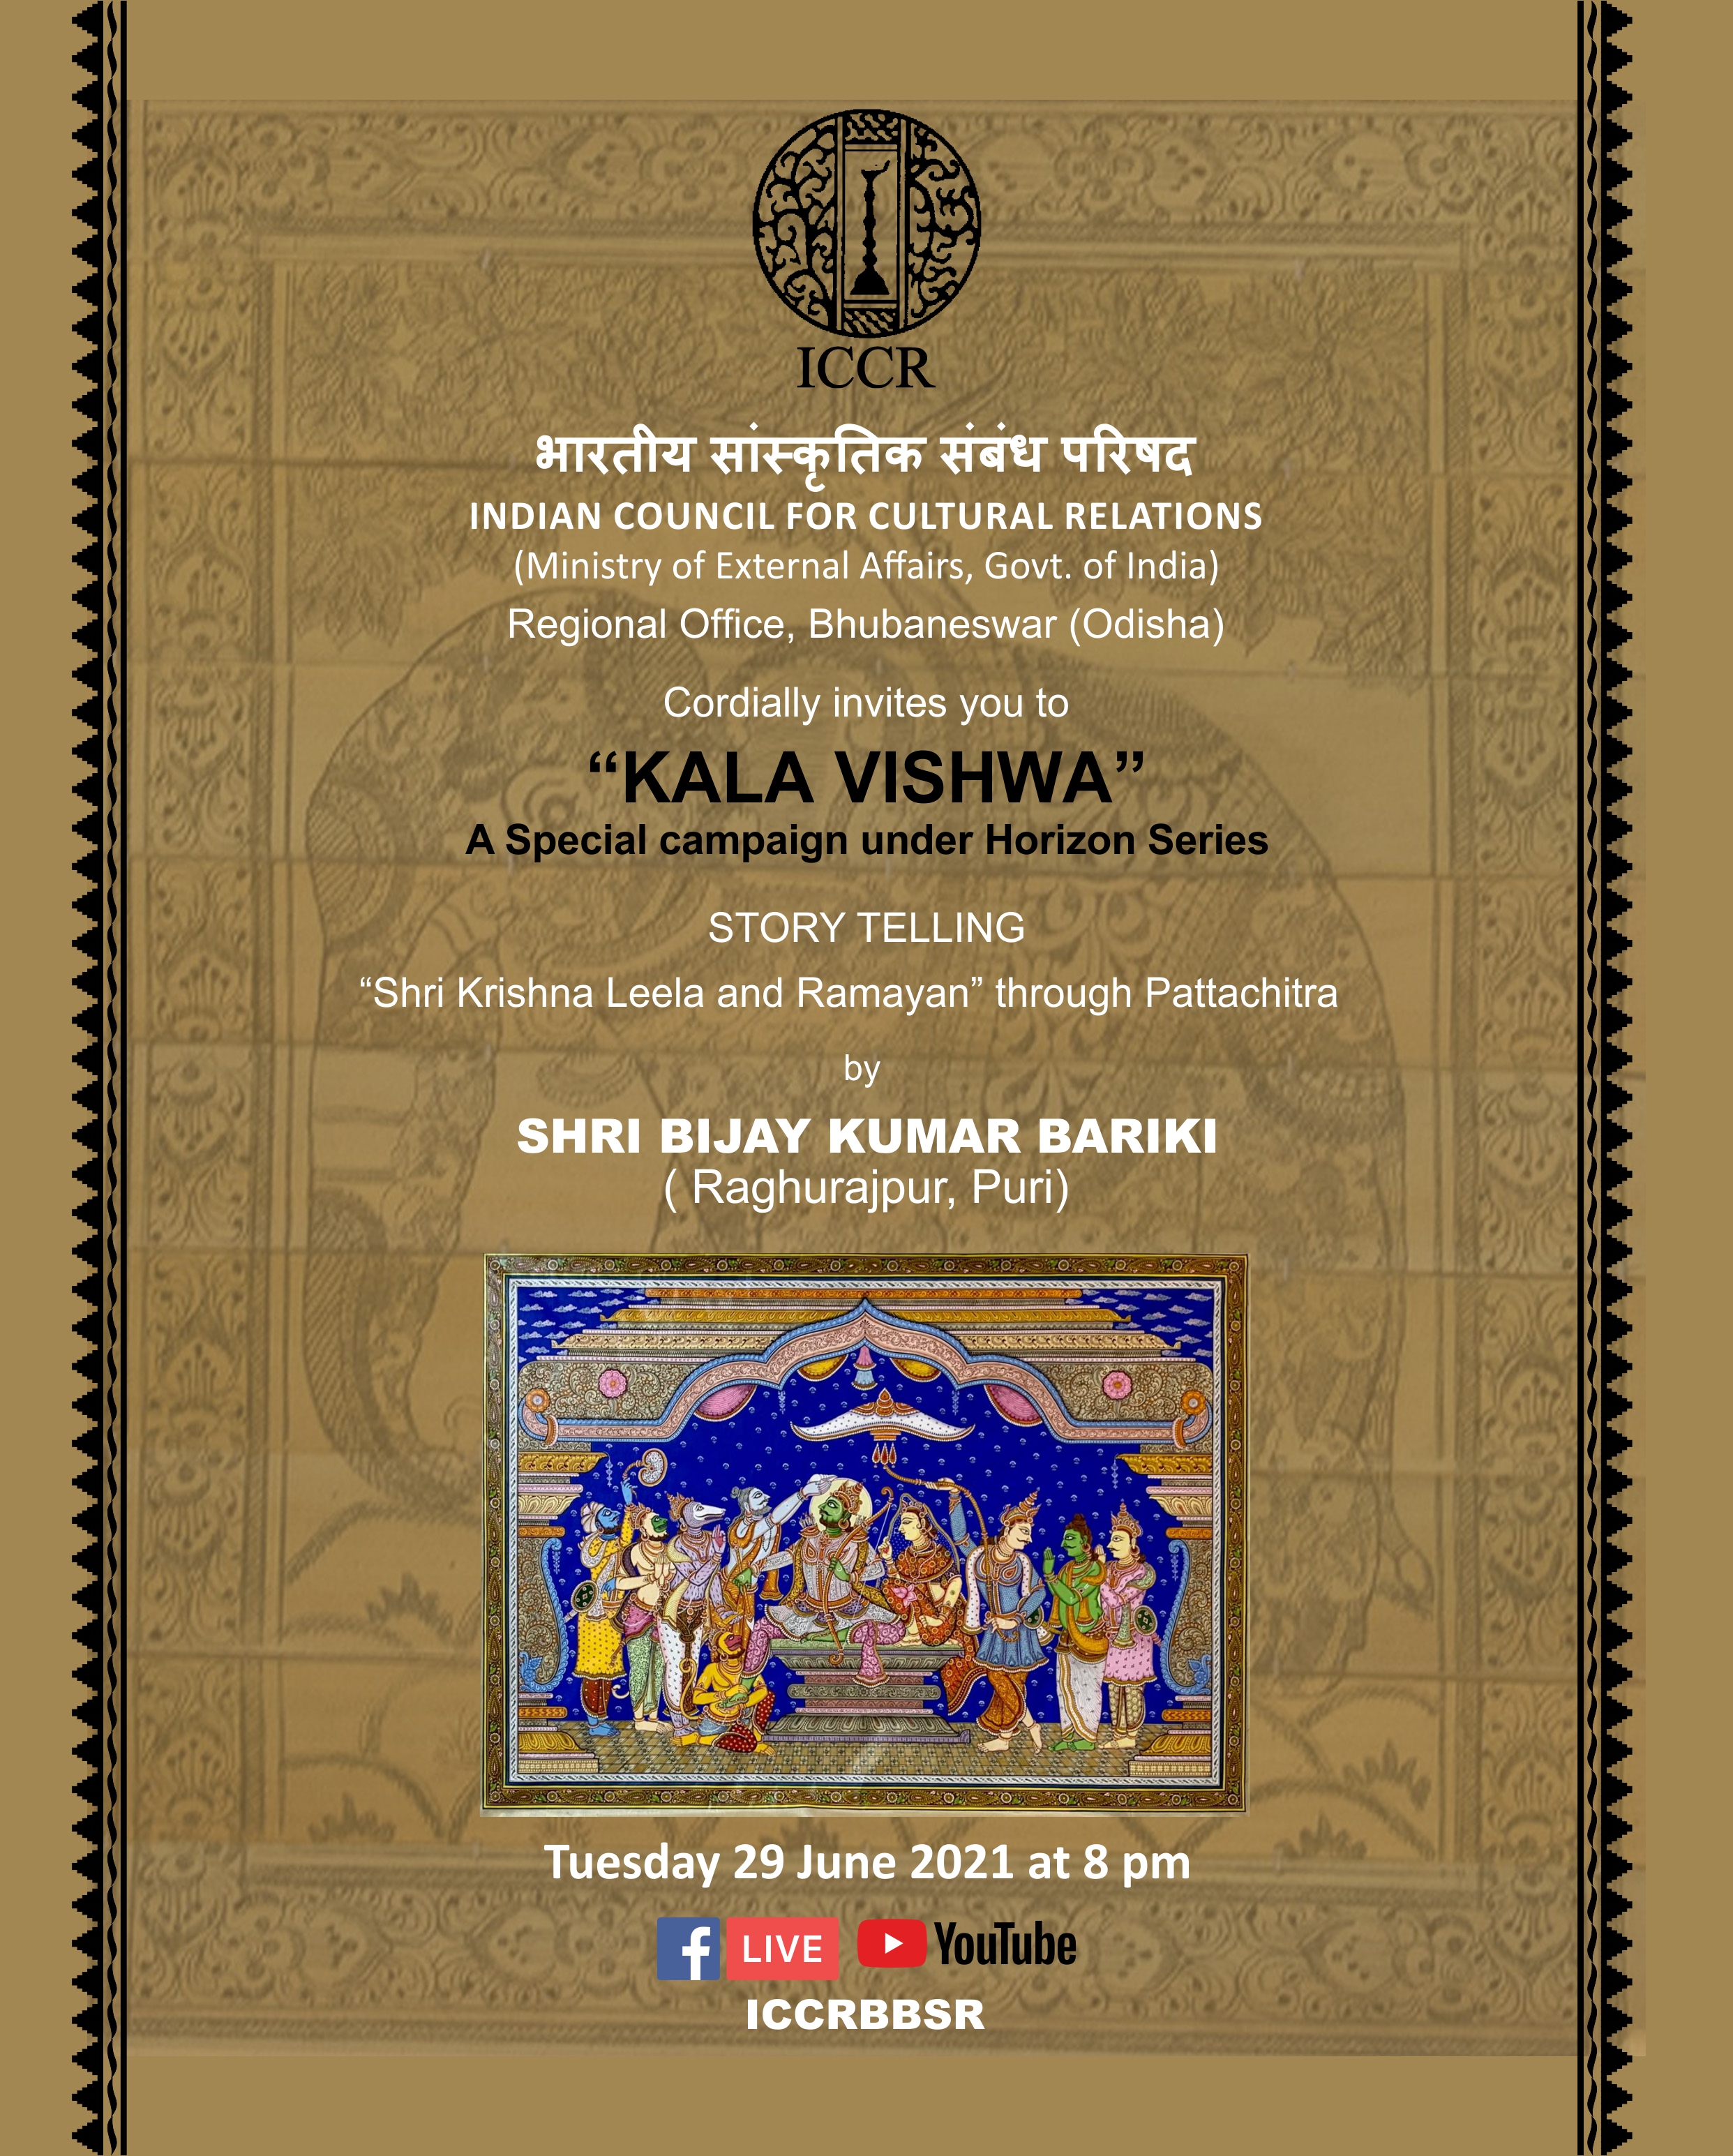 E-Invite : KALA VISHWA Campaign Episode # 3 under Horizon Series Tuesday, 29 June 2021 at 8 pm organized by Regional Office, Bhubaneswar (Odisha).